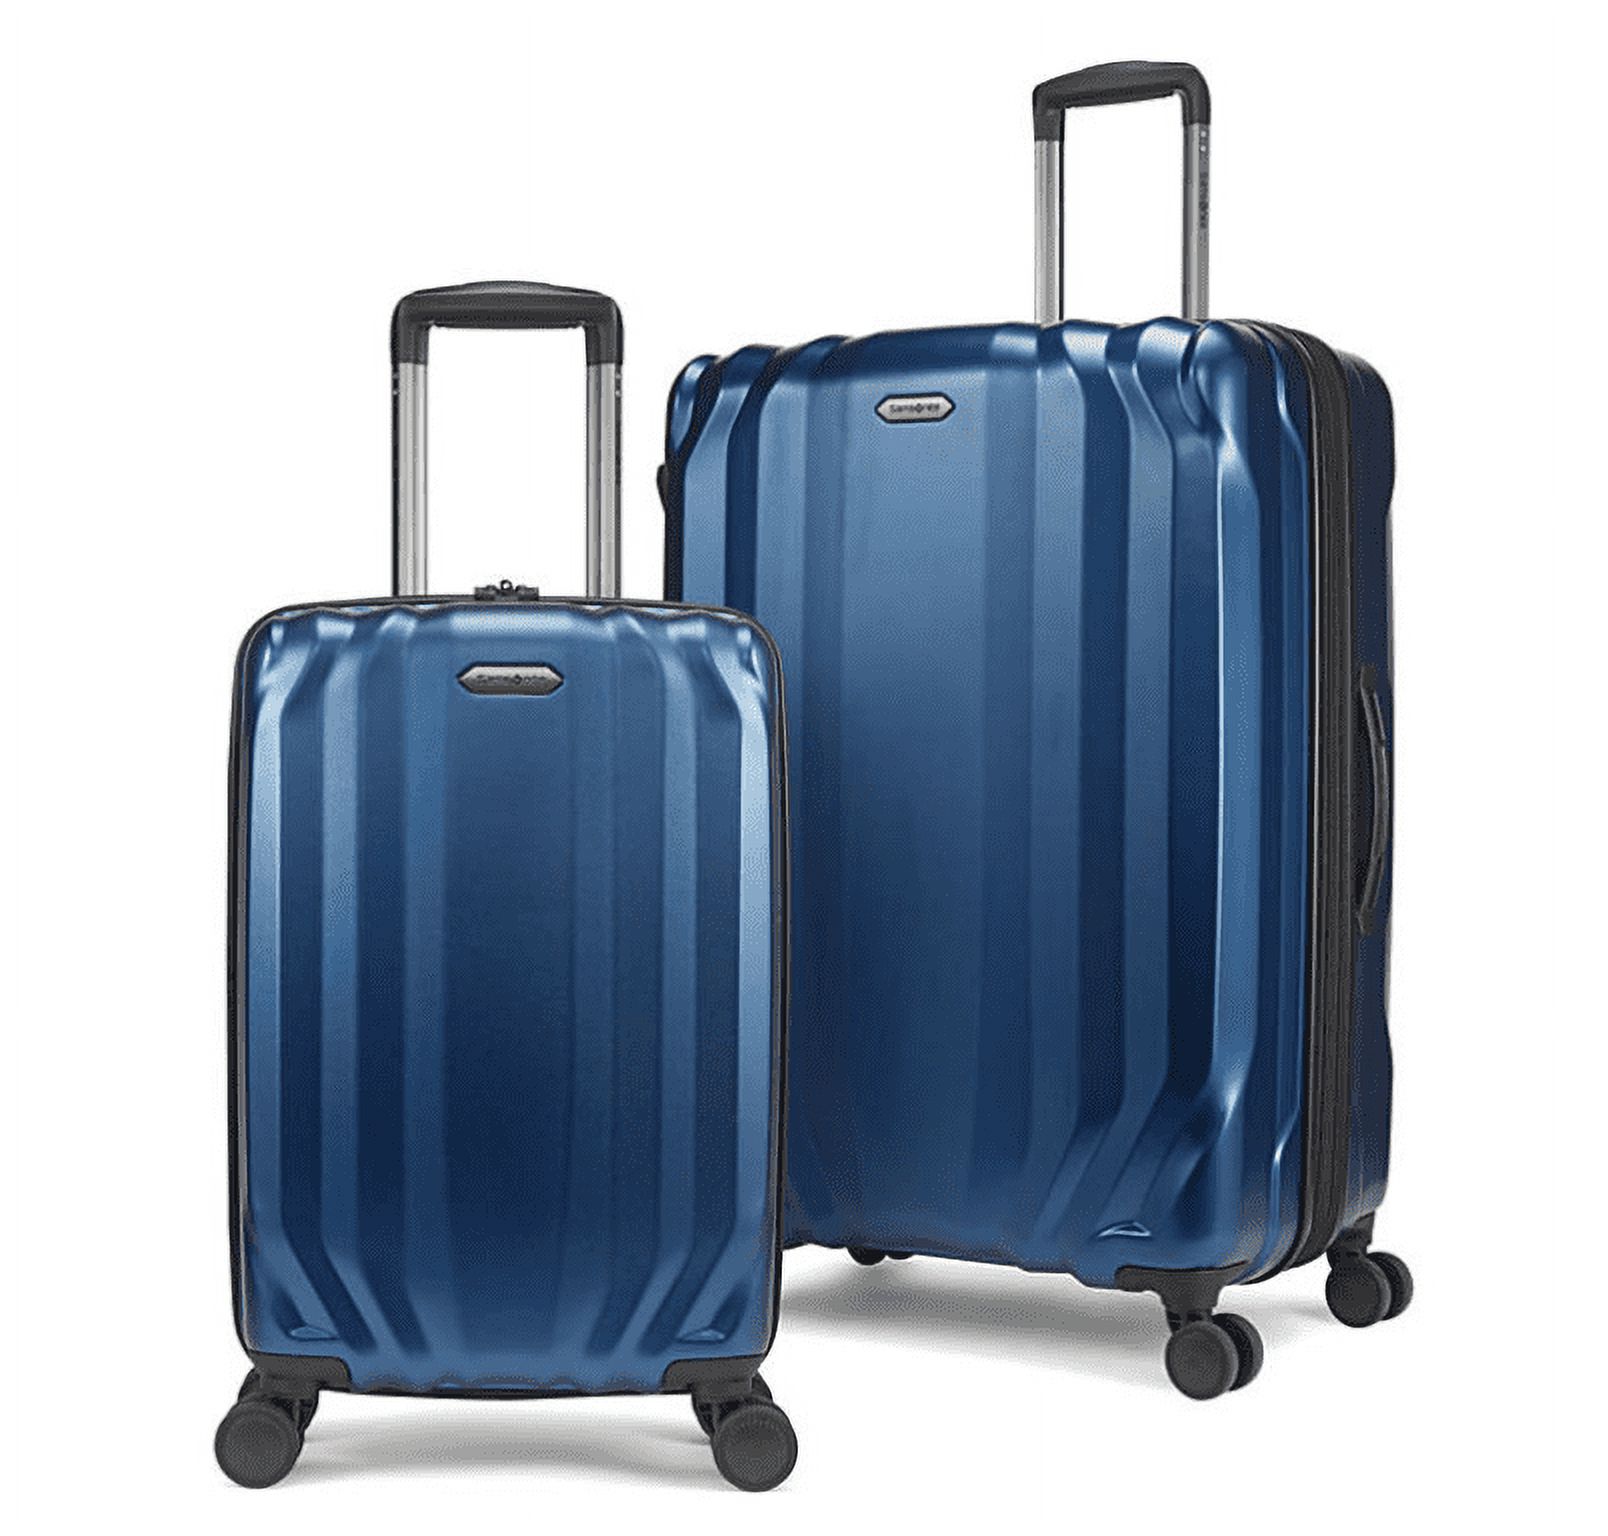 Samsonite 134852-1153 Volante Hardside Spinner Luggage 2-Piece Set blue - image 1 of 2